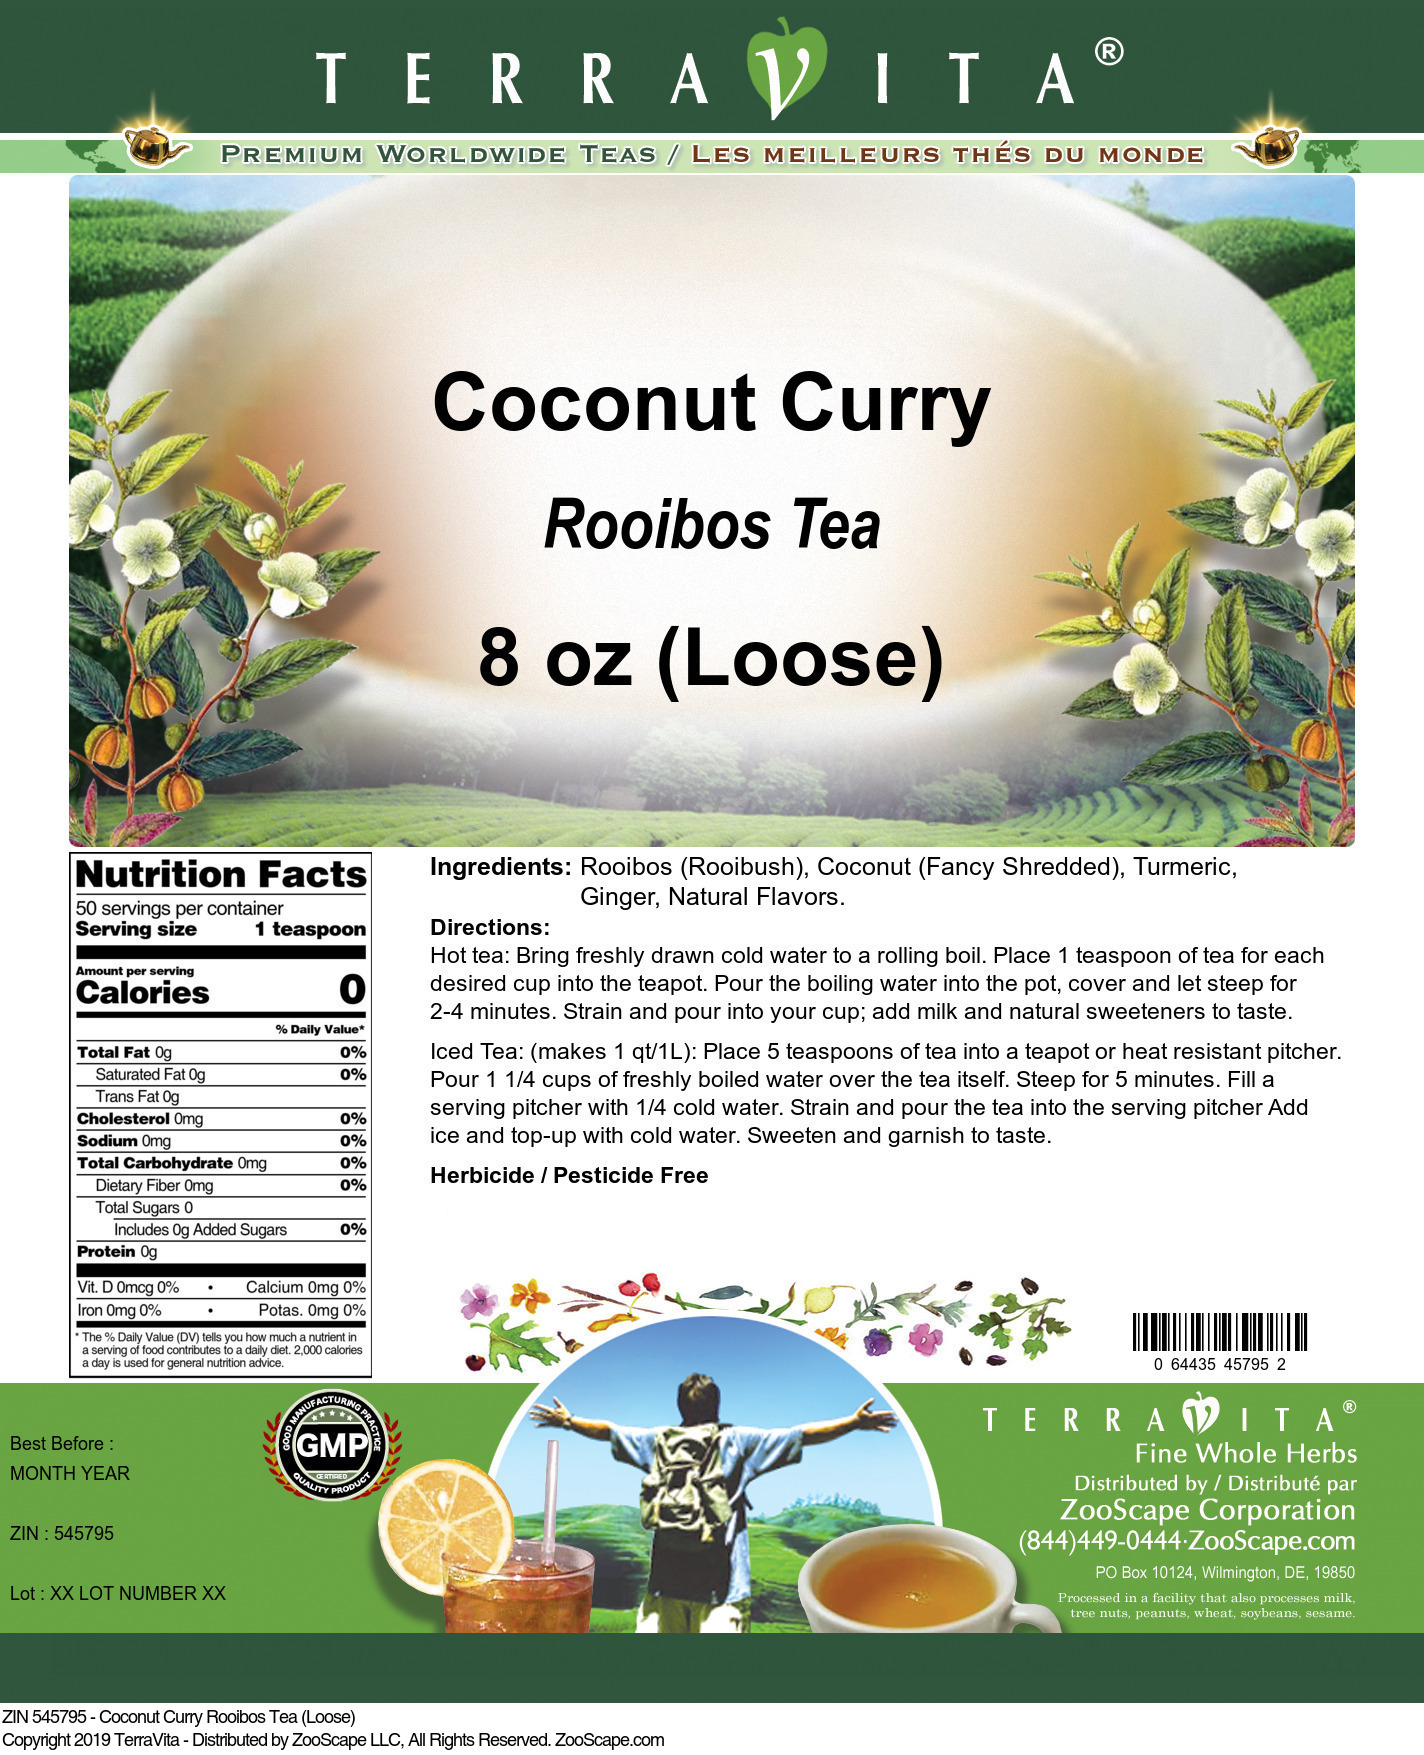 Coconut Curry Rooibos Tea (Loose) - Label